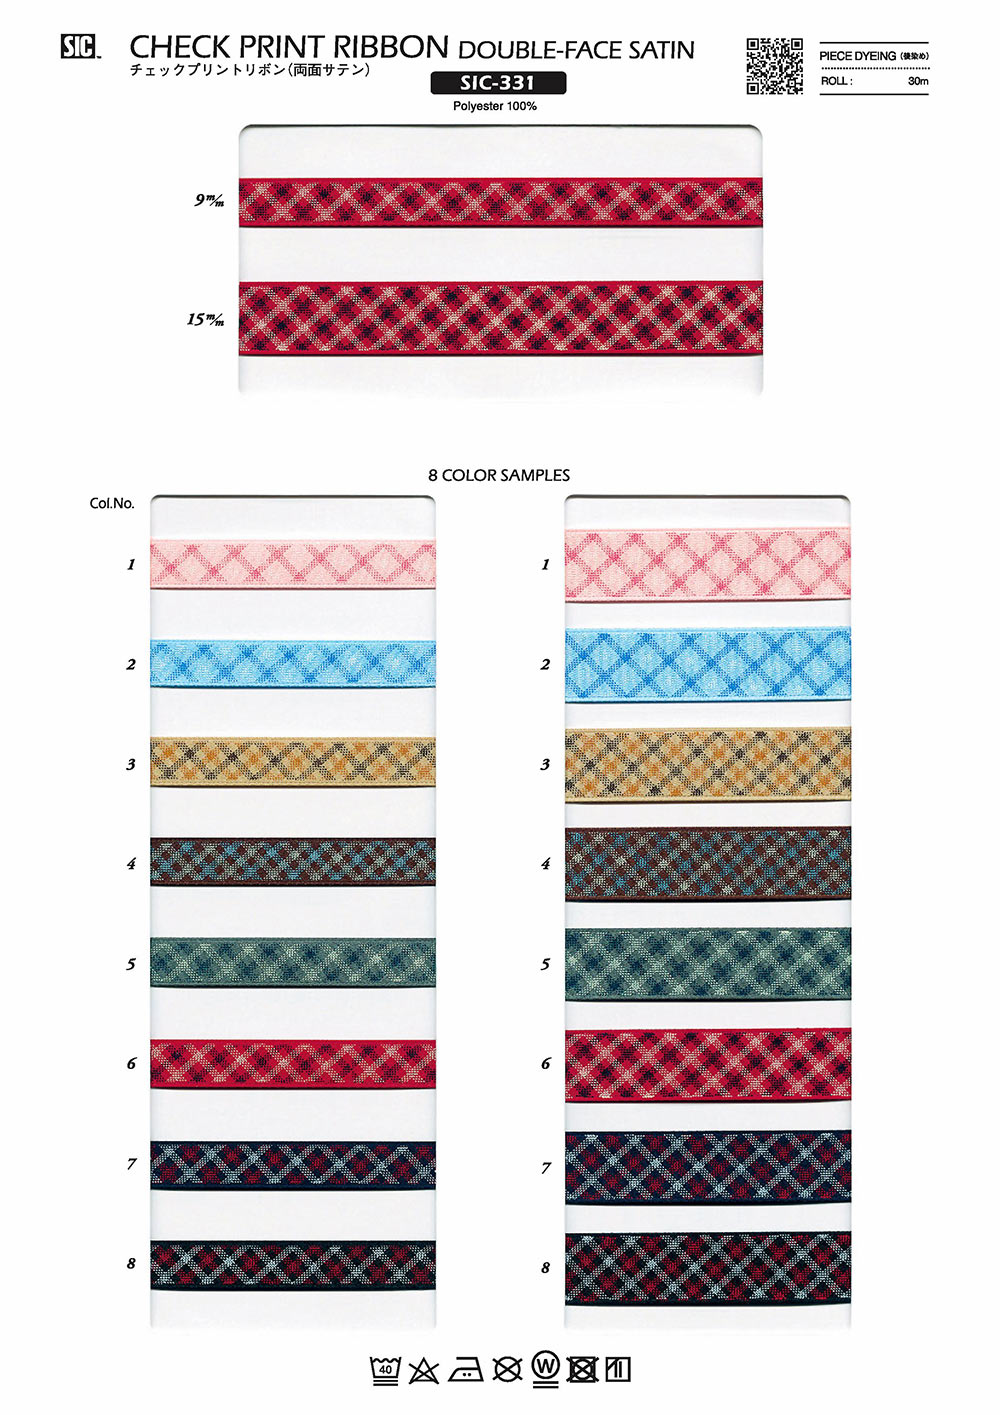 SIC-331 格紋打印緞帶/絲帶（雙面橫貢緞）[緞帶/絲帶帶繩子] 新道良質(SIC)